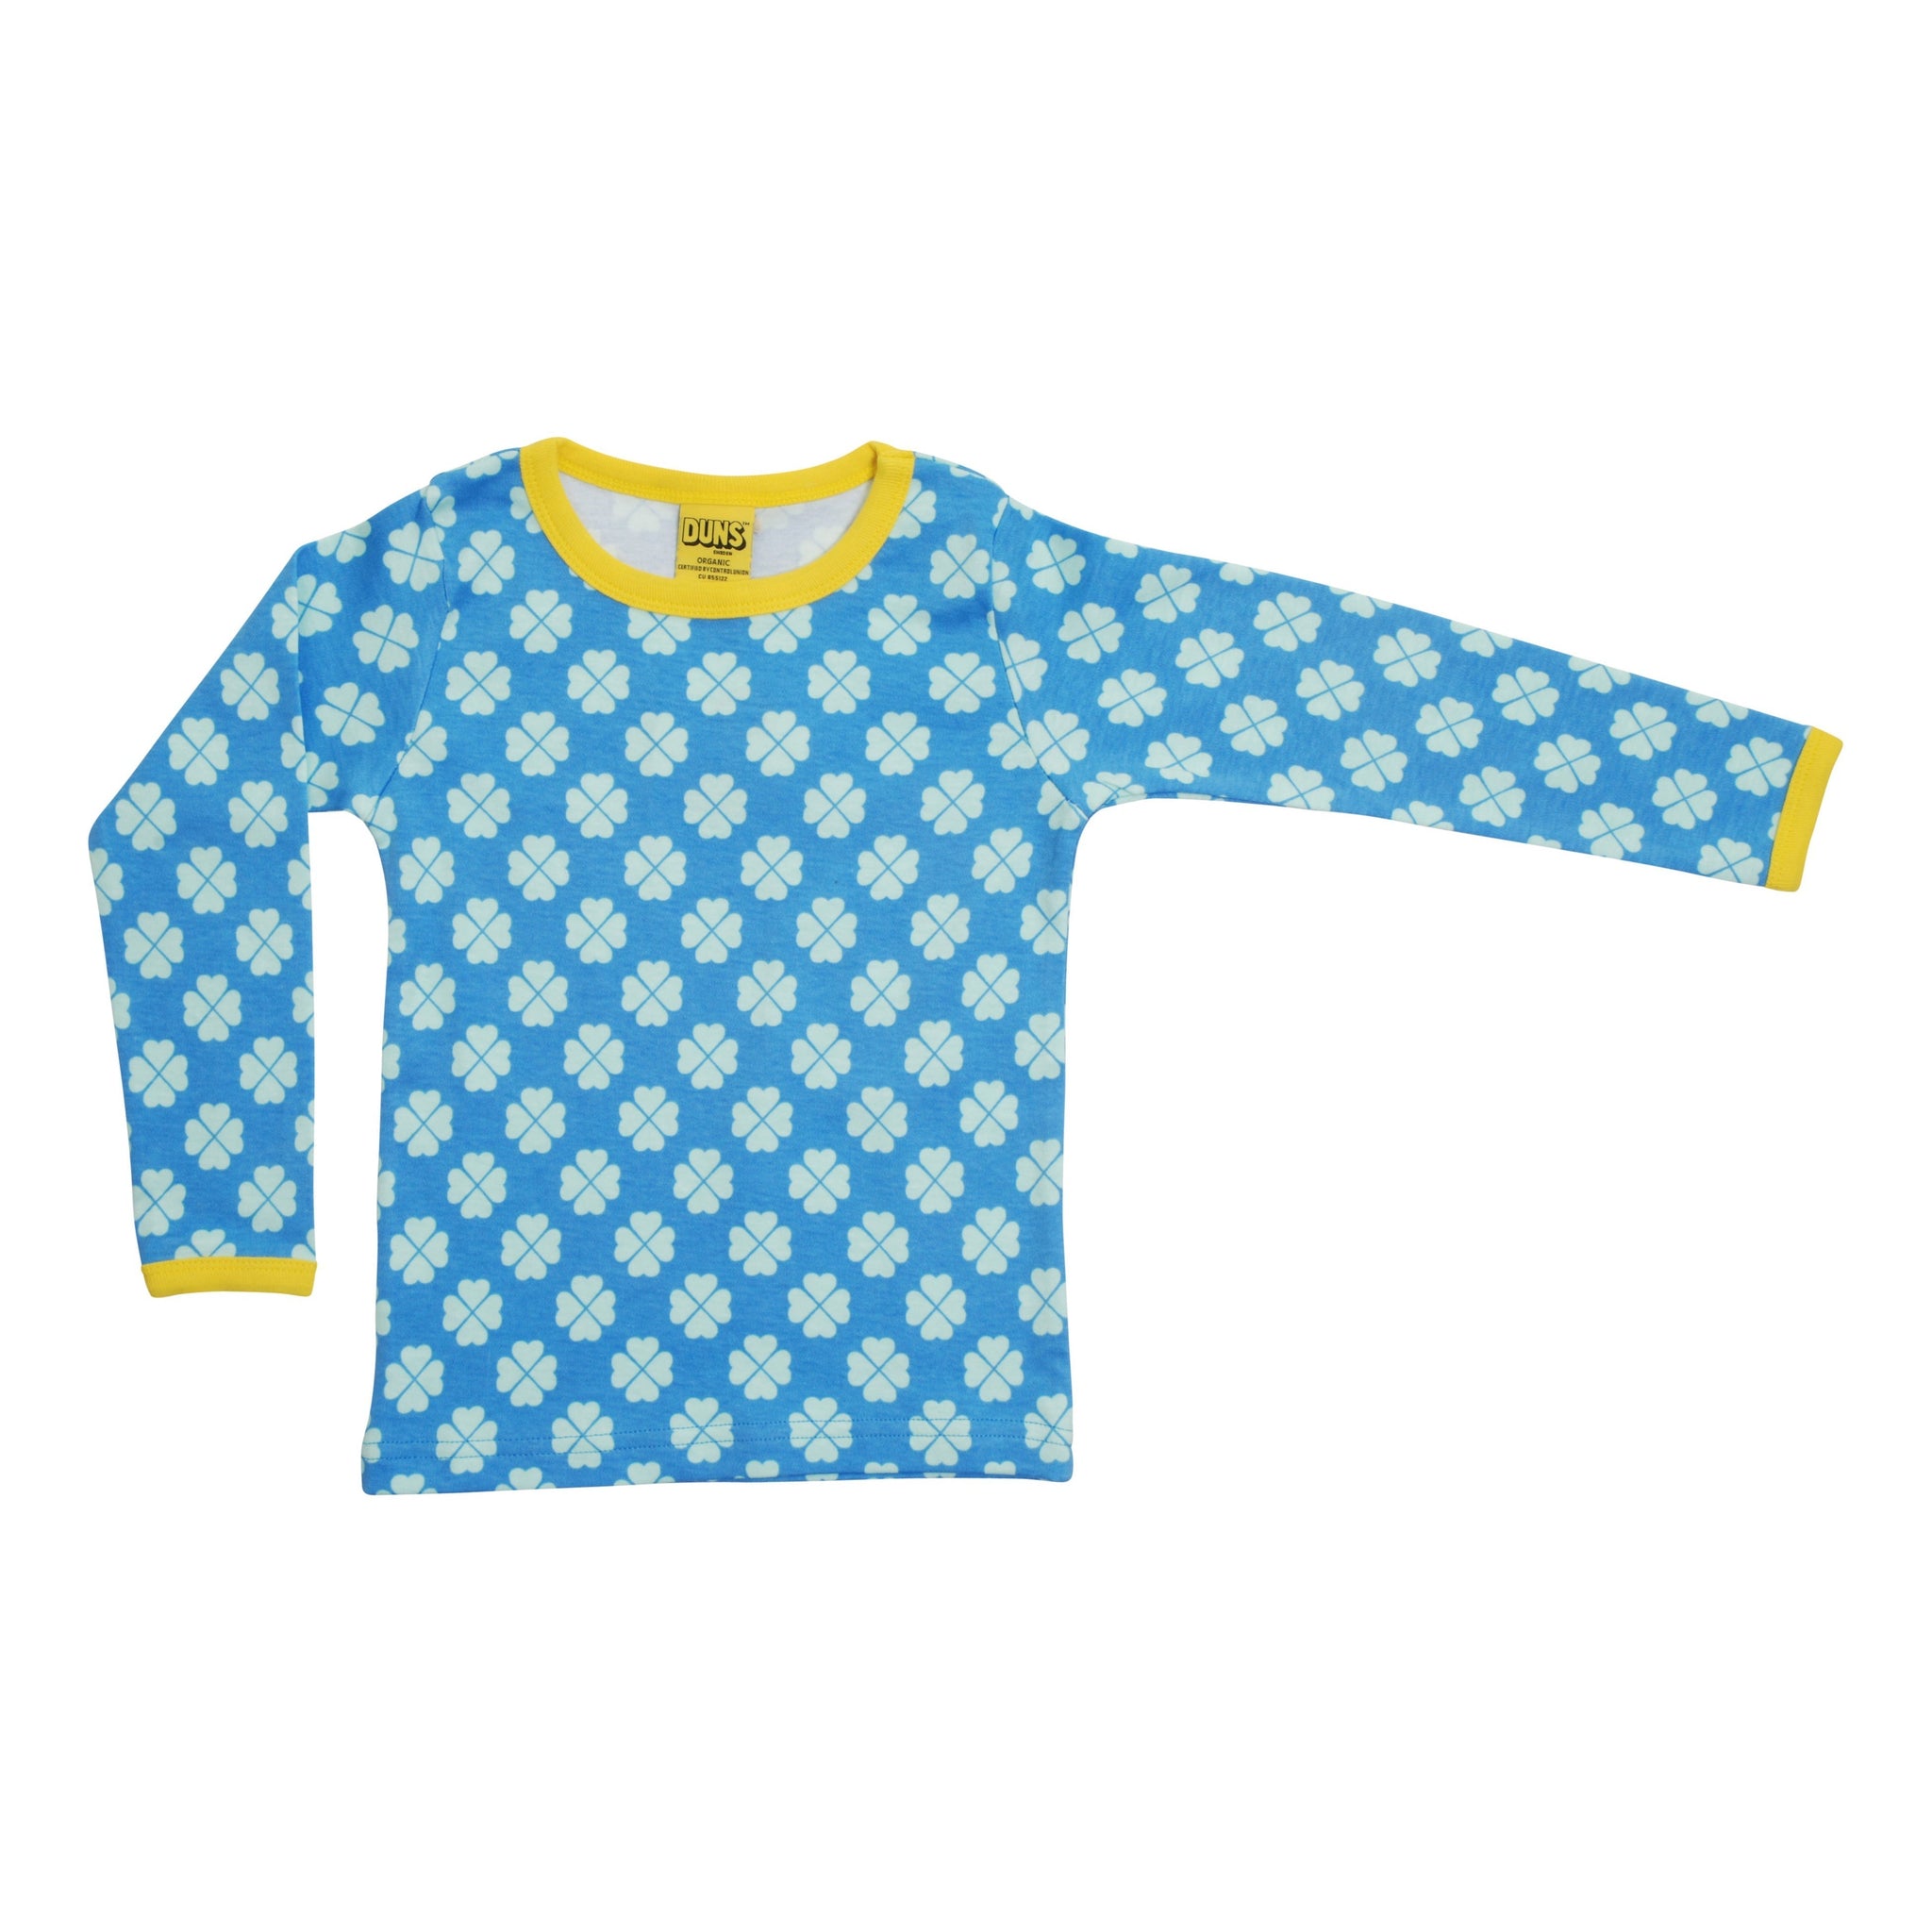 DUNS Sweden - Clover Long Sleeved Top (Blue)